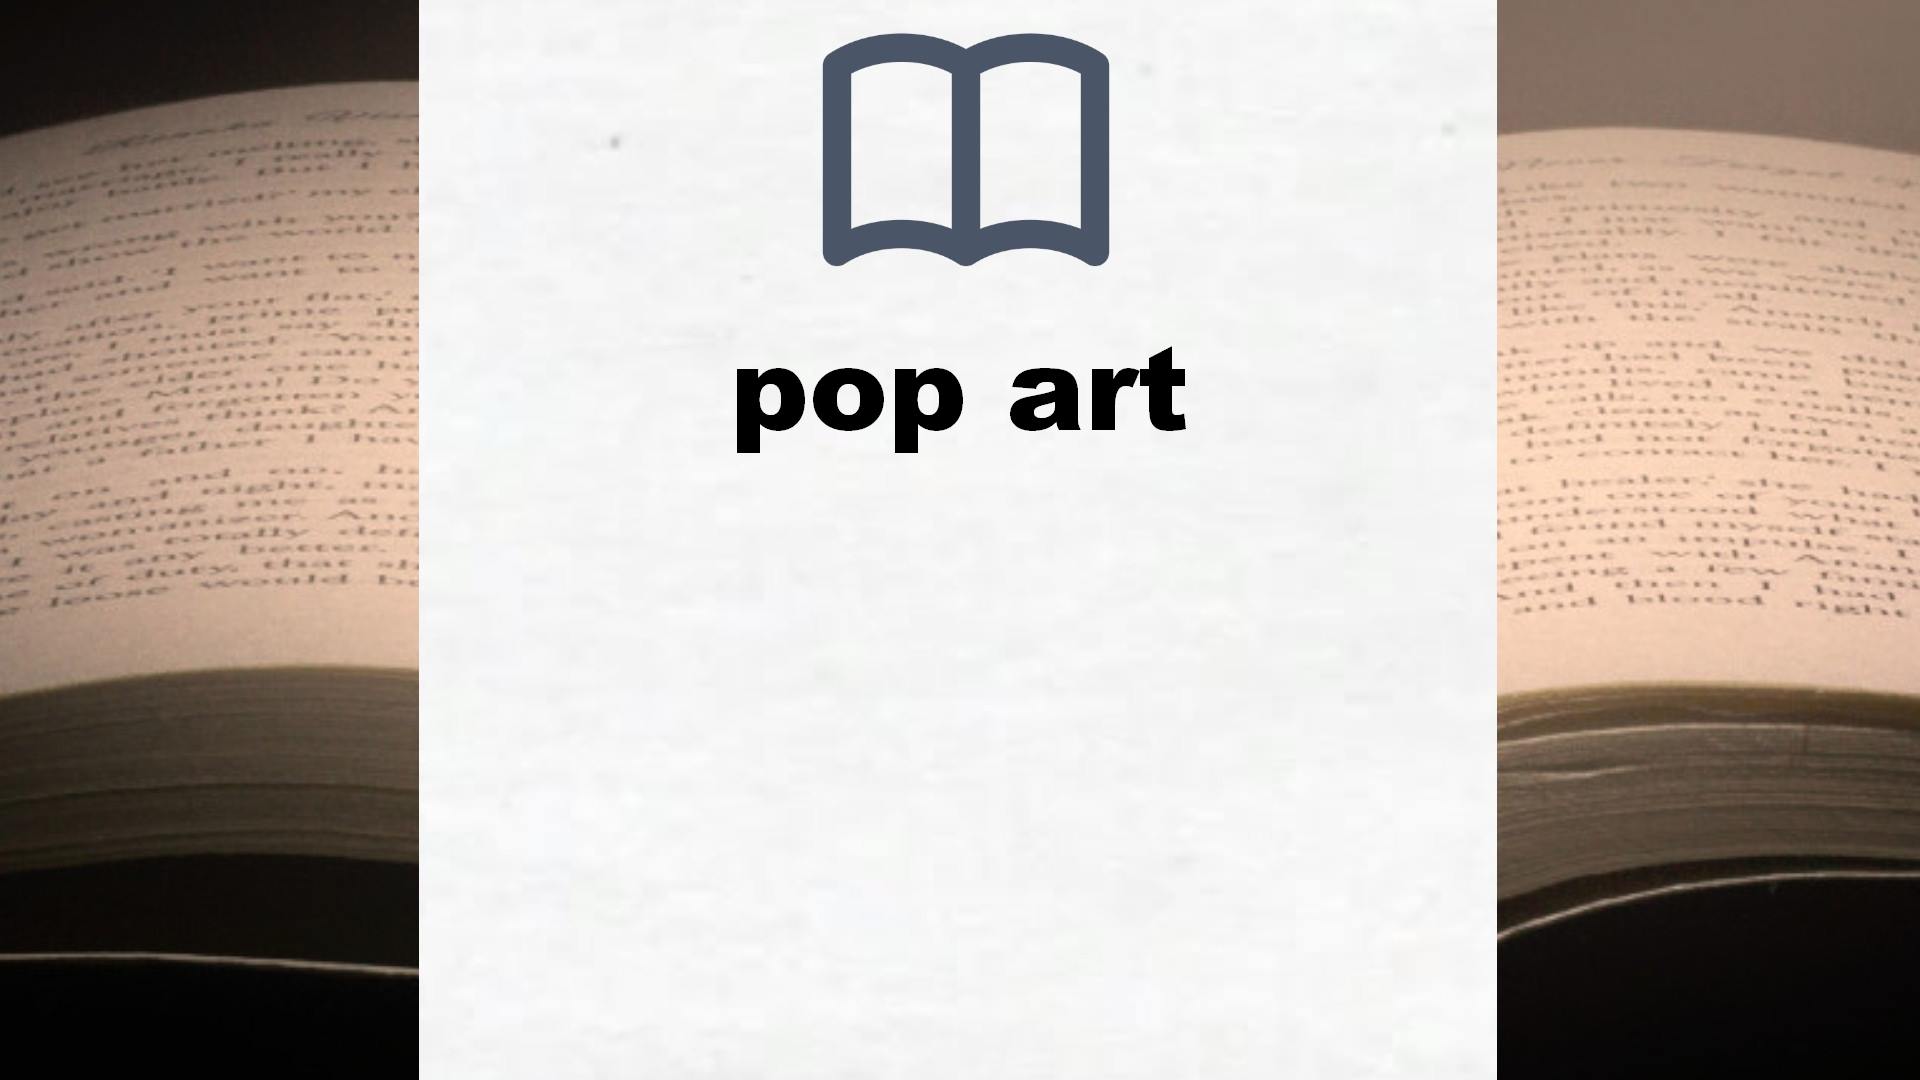 Libros sobre pop art